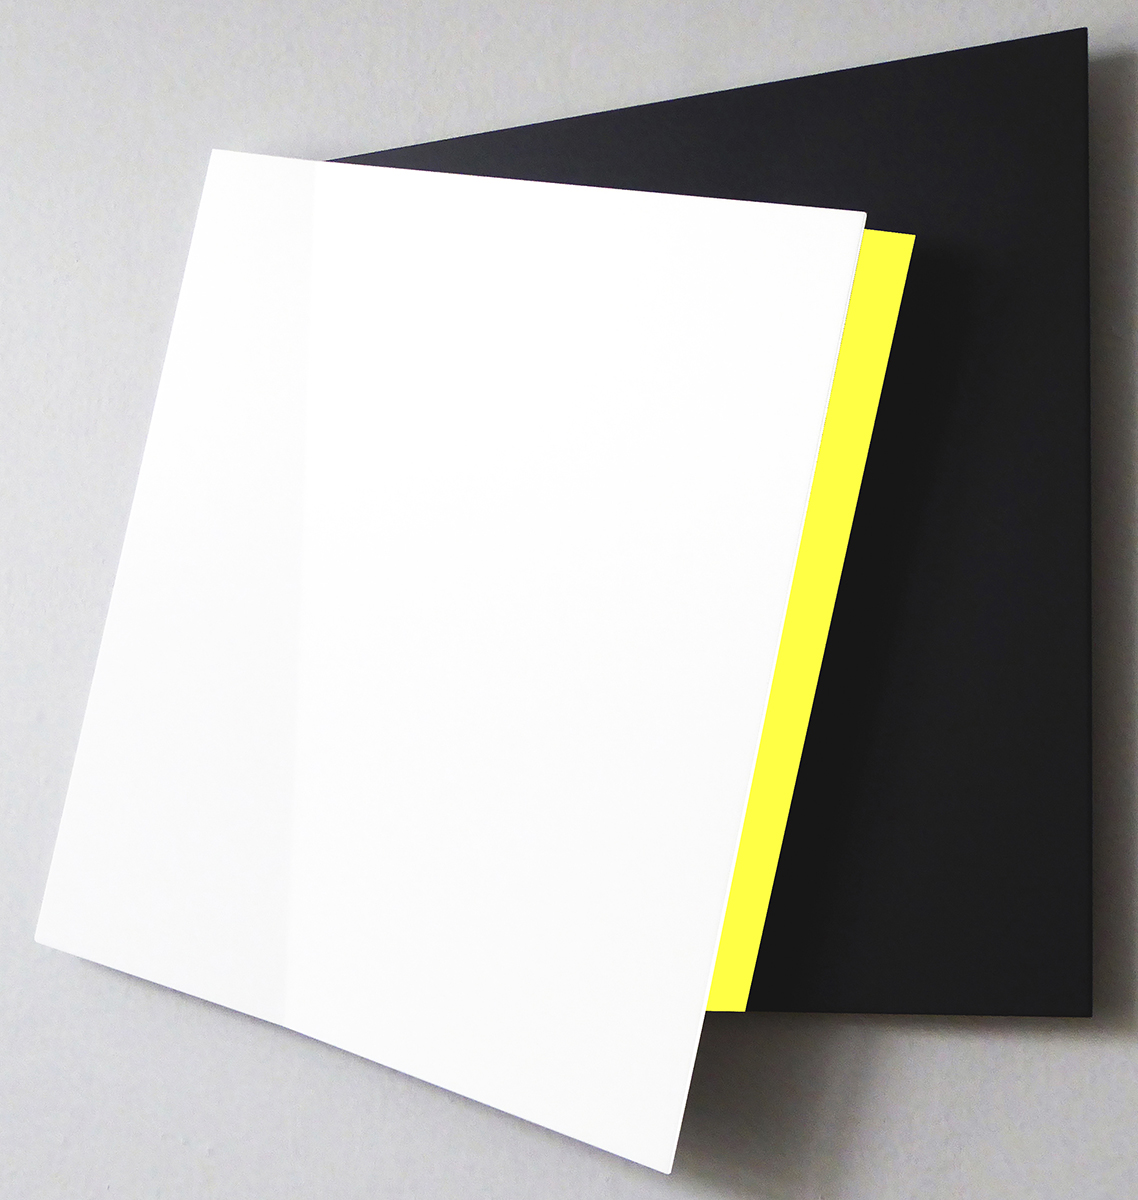 Weiß-Schwarz-Gelbraum I, 201652,5 x 52,5 x 5 cmwhite-black-luminous yellow, aluminium, acrylic lacquer